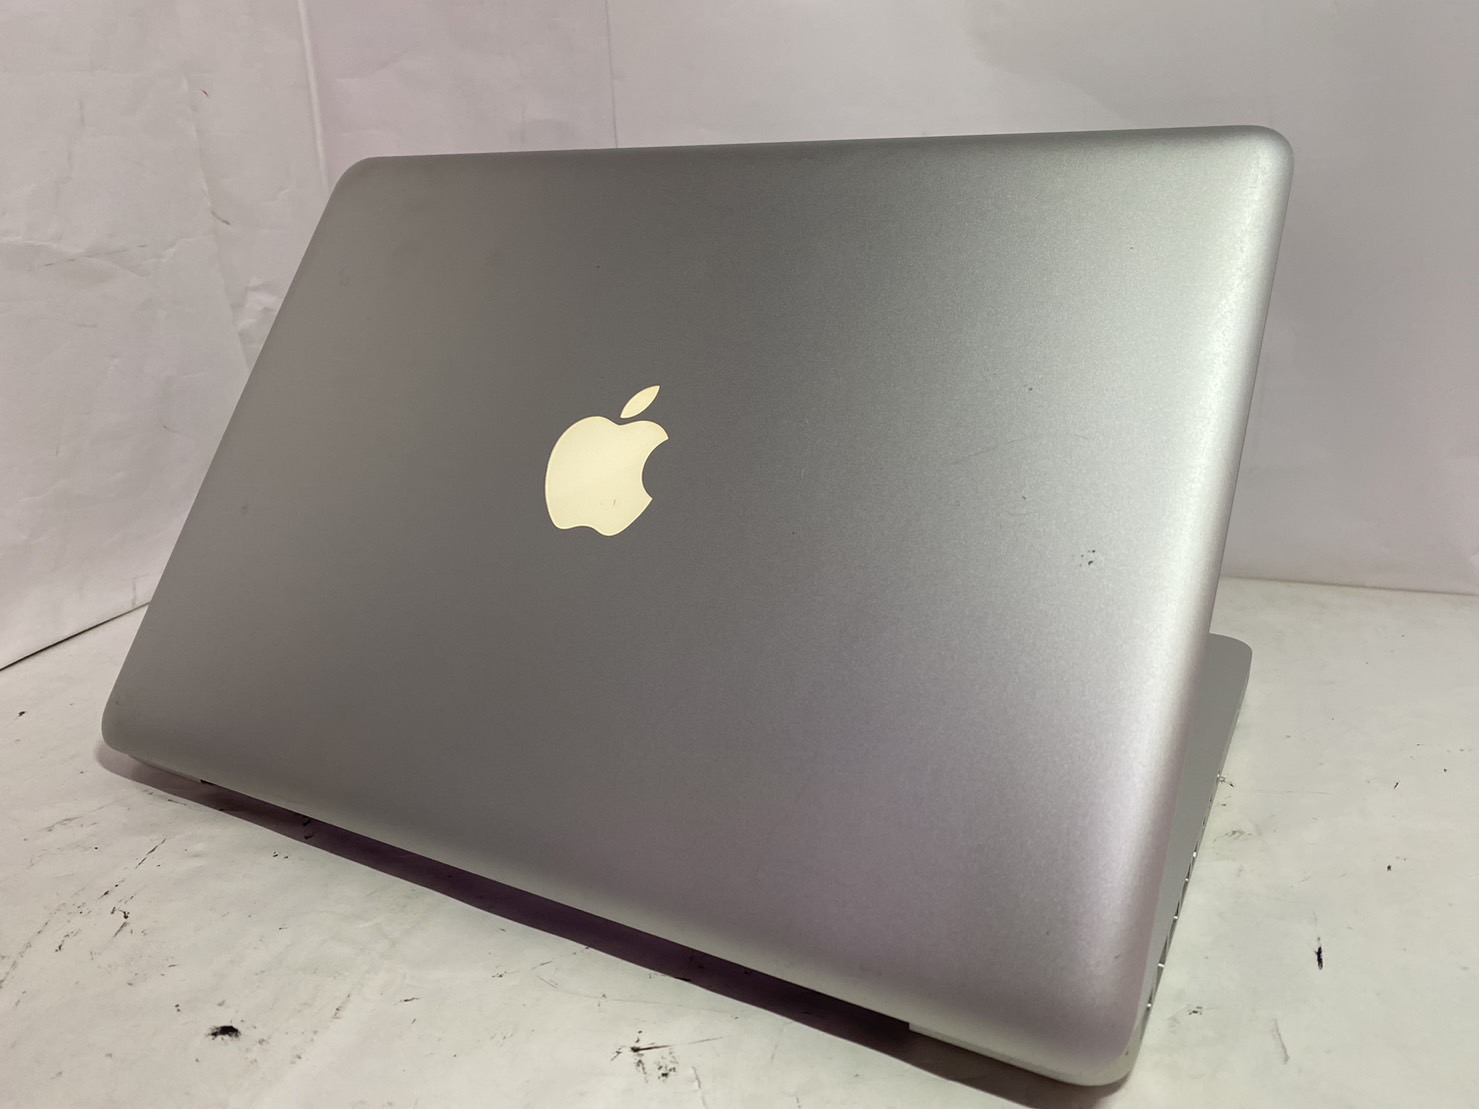 APPLE(アップル) MacBook (13-inch, Aluminum, Late 2008) A1278の激安通販